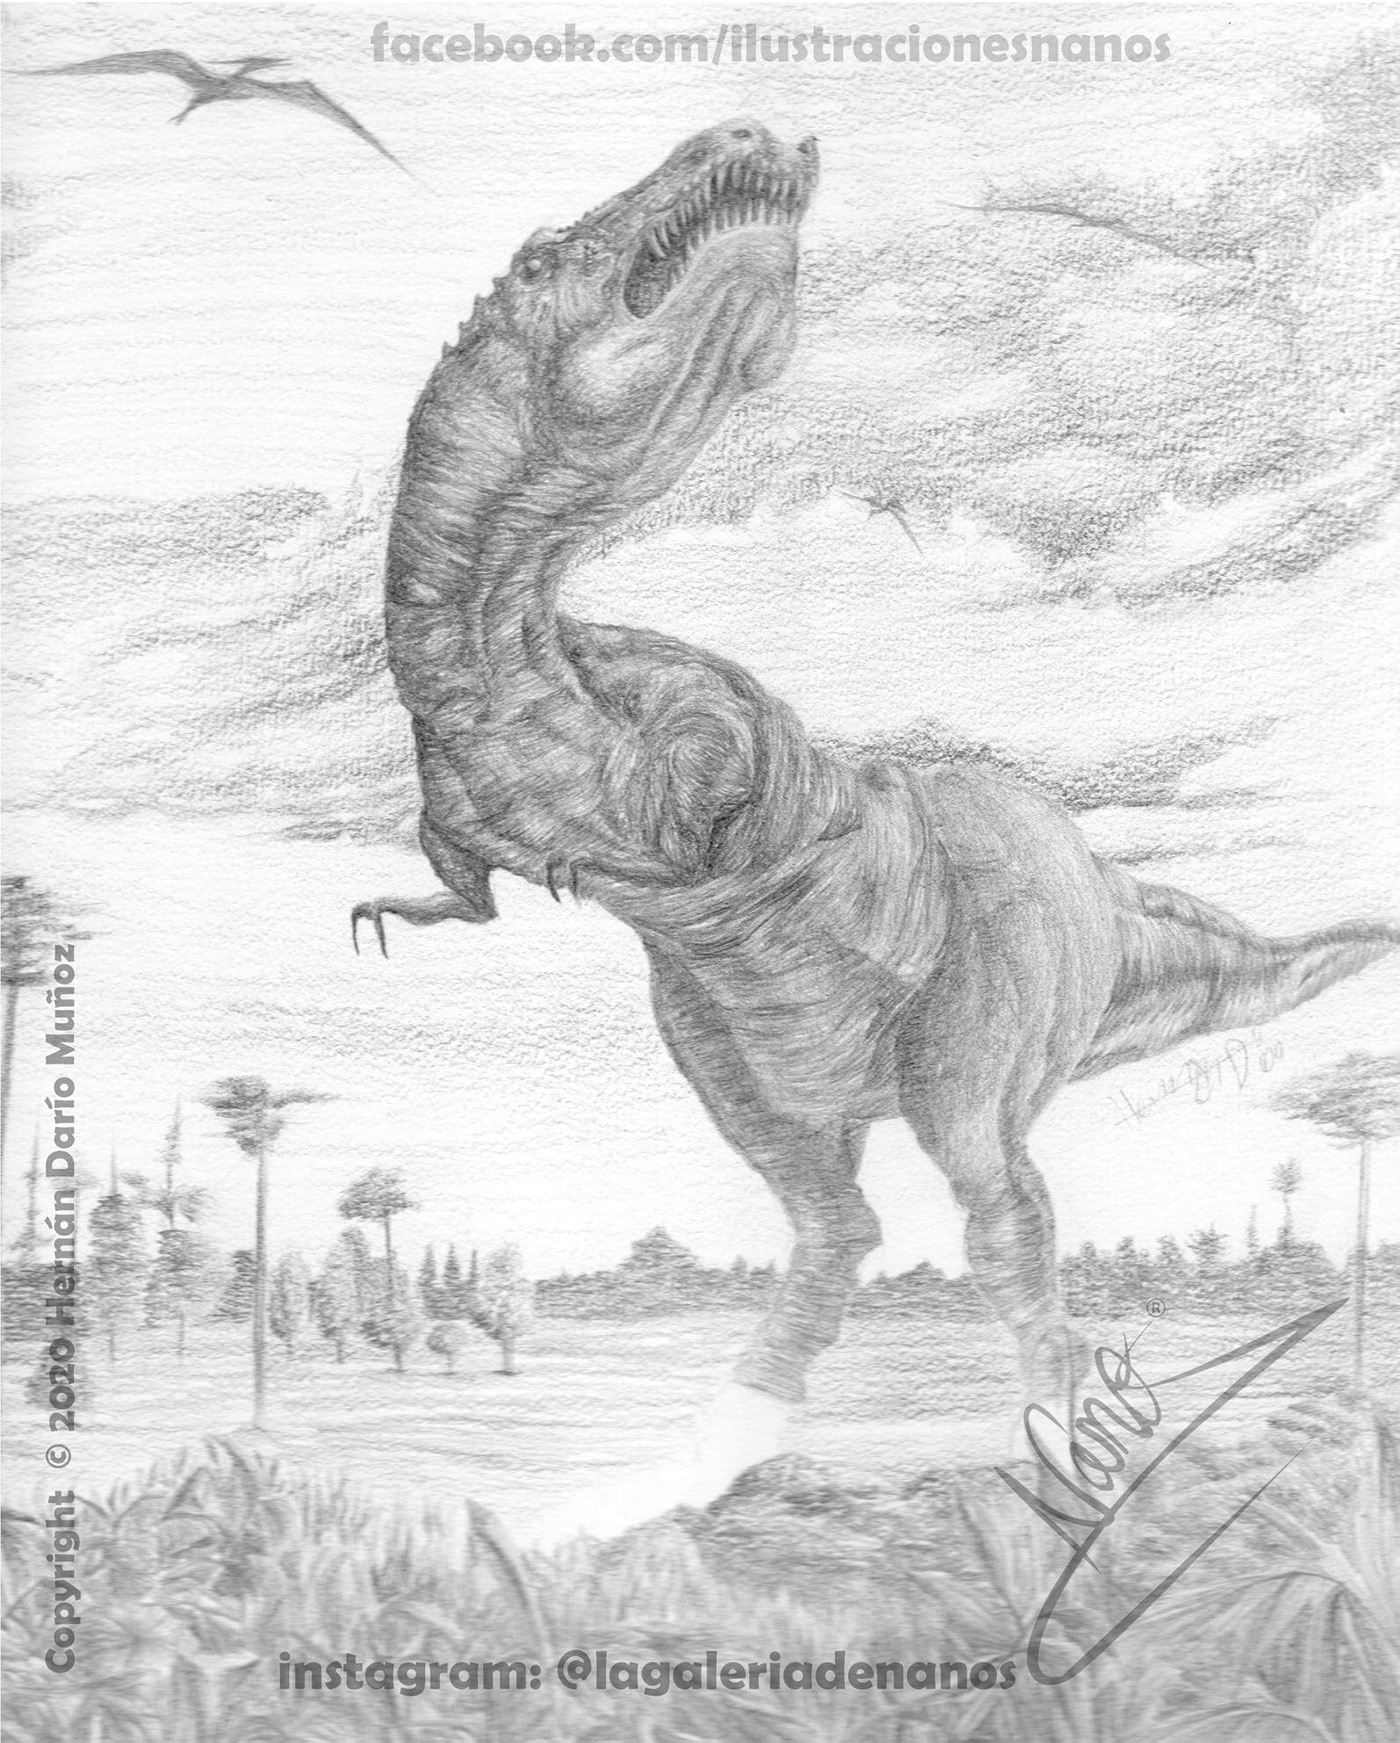 Drawing  ilustracion scientific illustration animals Nature history dinosaurs tyrannosaurus ilustración científica t-rex